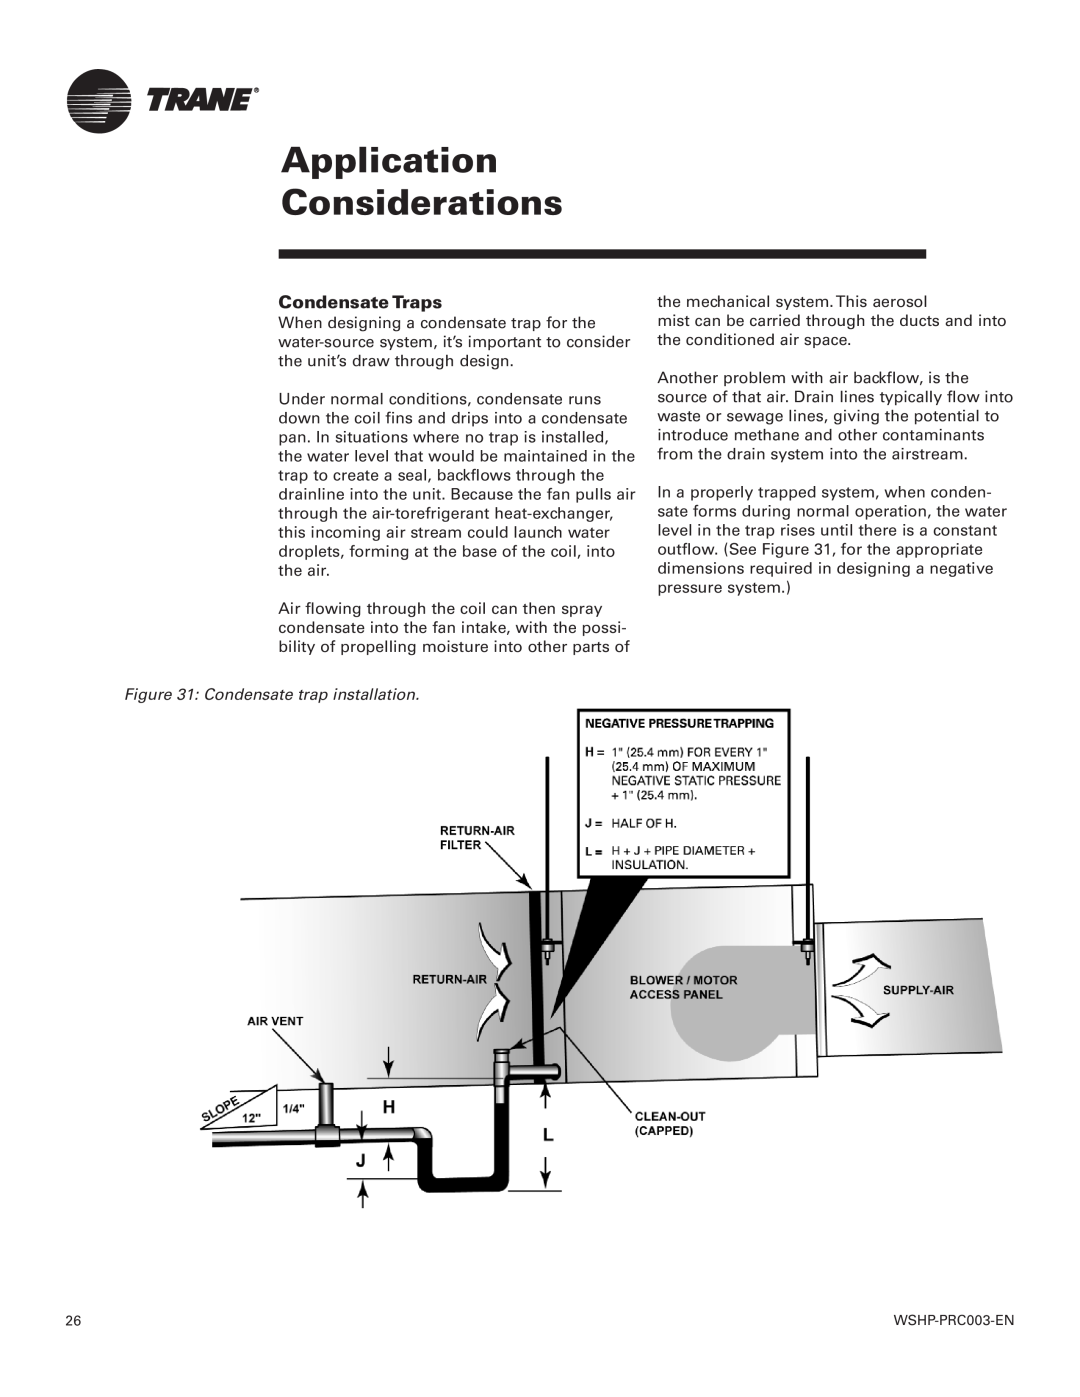 Trane Model 012 GEH, Model 180 GEV, 120 GEH manual Application Considerations, Condensate Traps, Condensate trap installation 